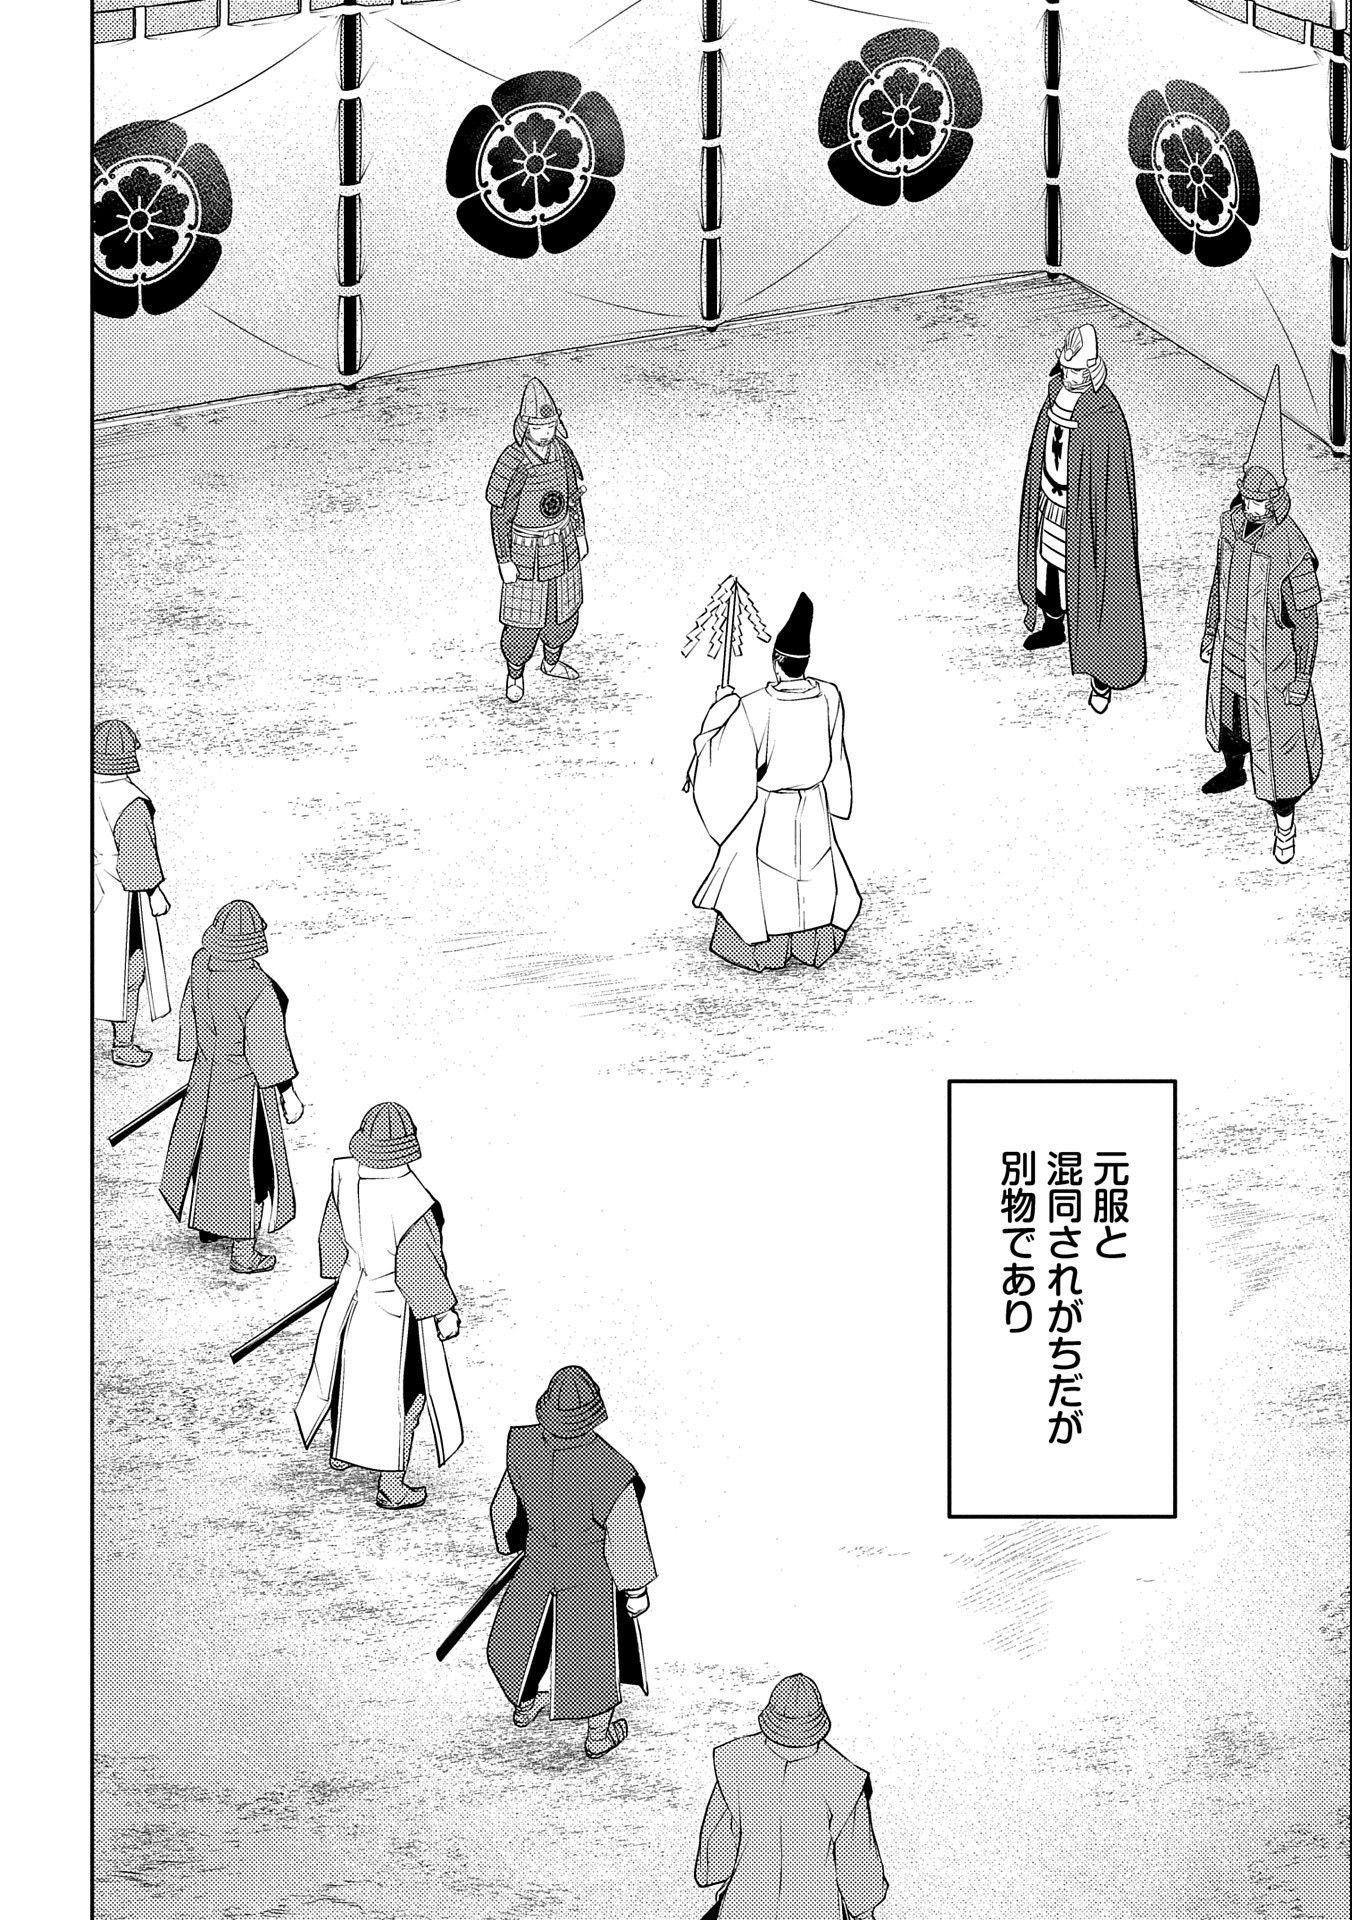 Sengoku Komachi Kuroutan - Chapter 75 - Page 2